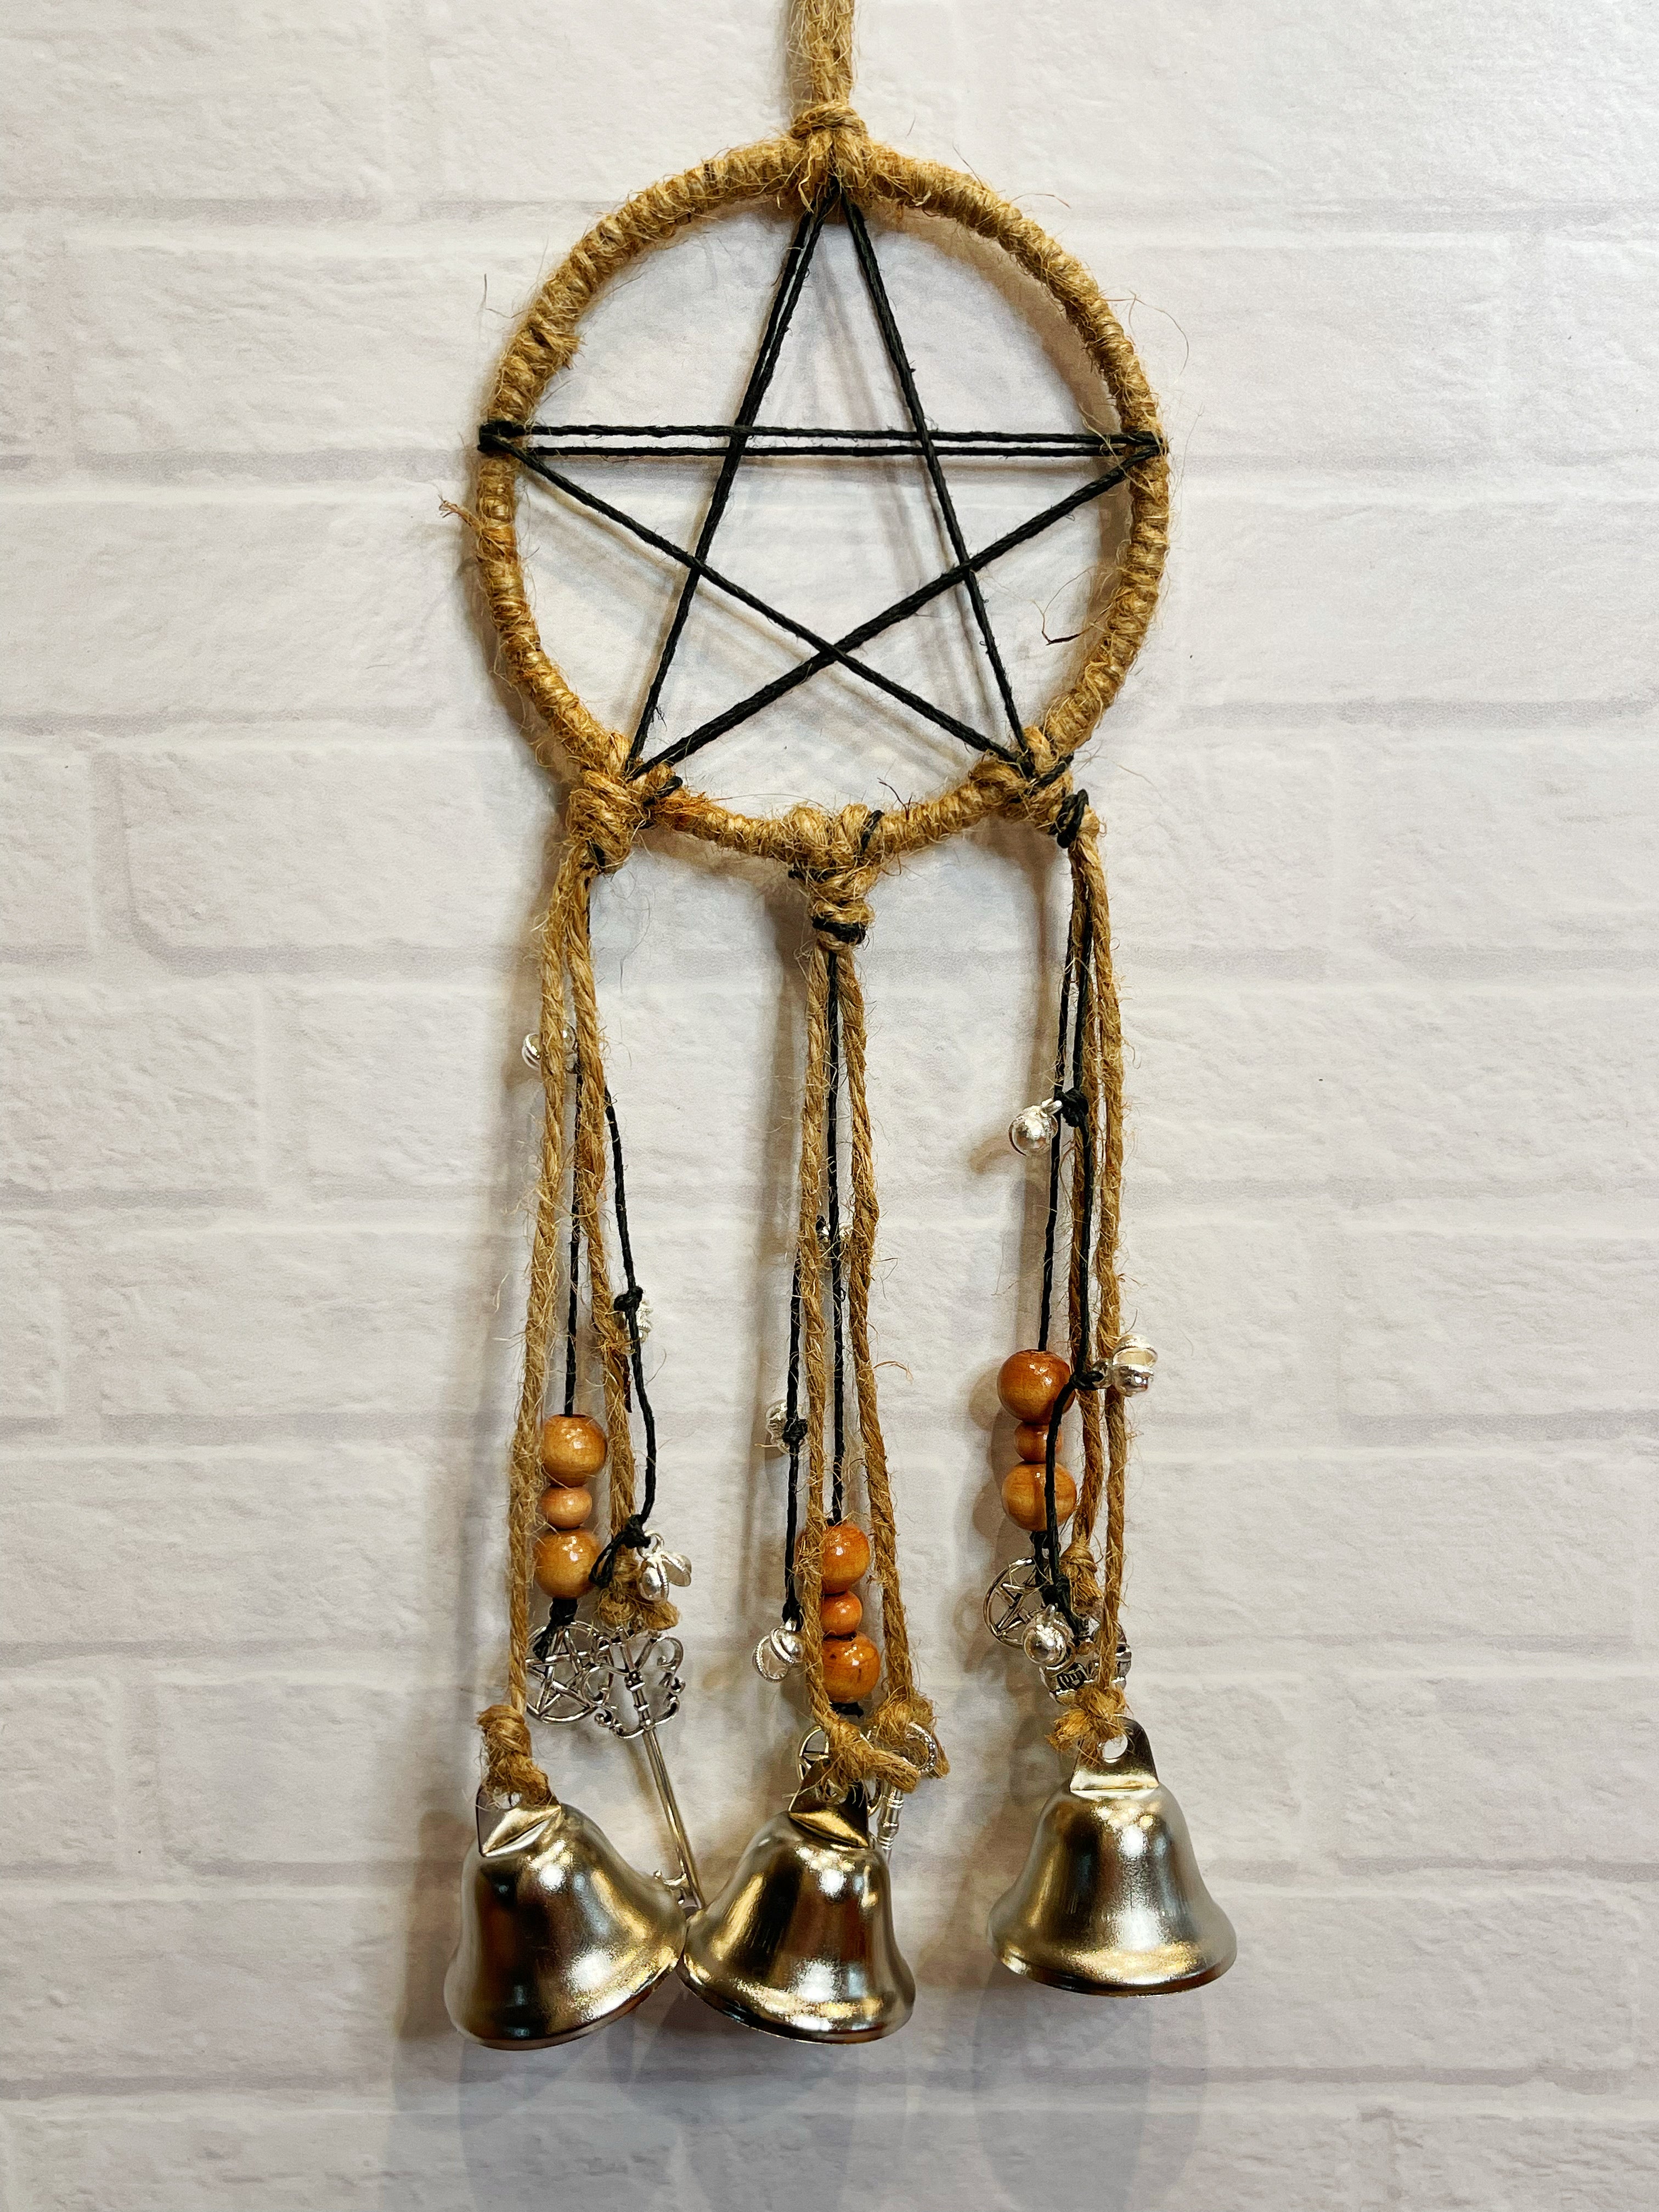 Pentagram Witches Bells